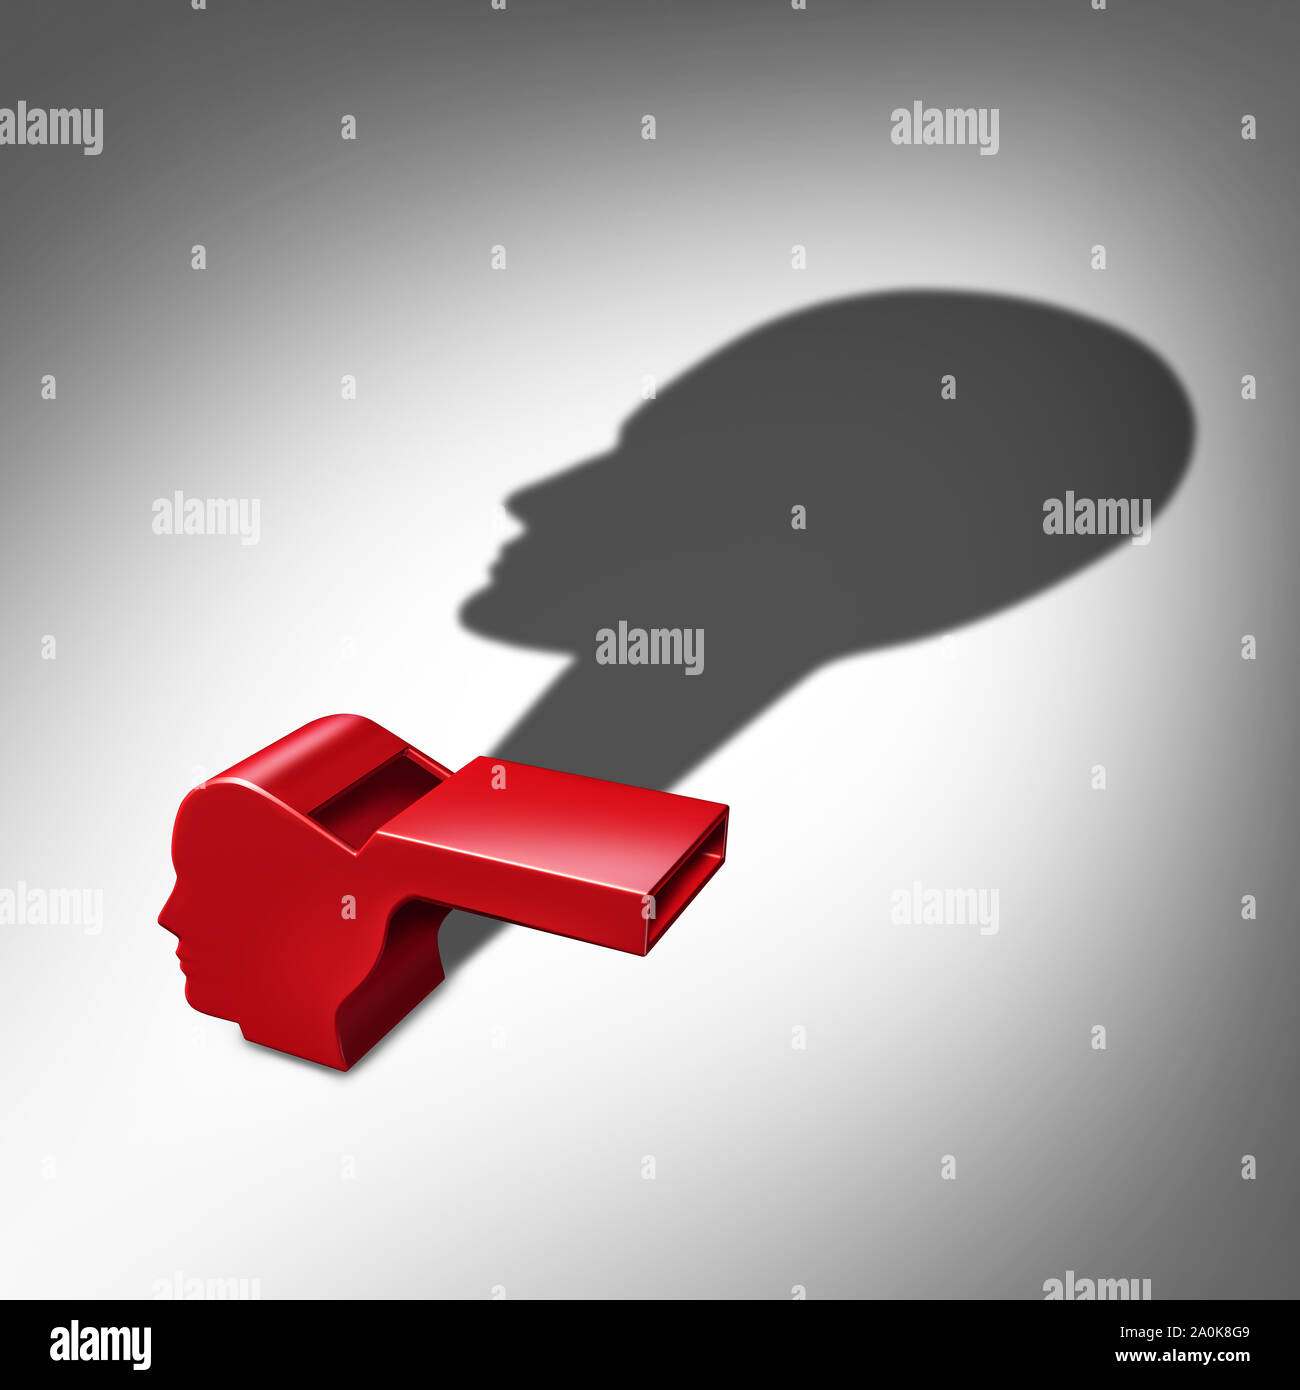 Whistleblower o informante exponer información concepto como símbolo de un informante secreto agente o empleado con un elenco sombra como una metáfora. Foto de stock